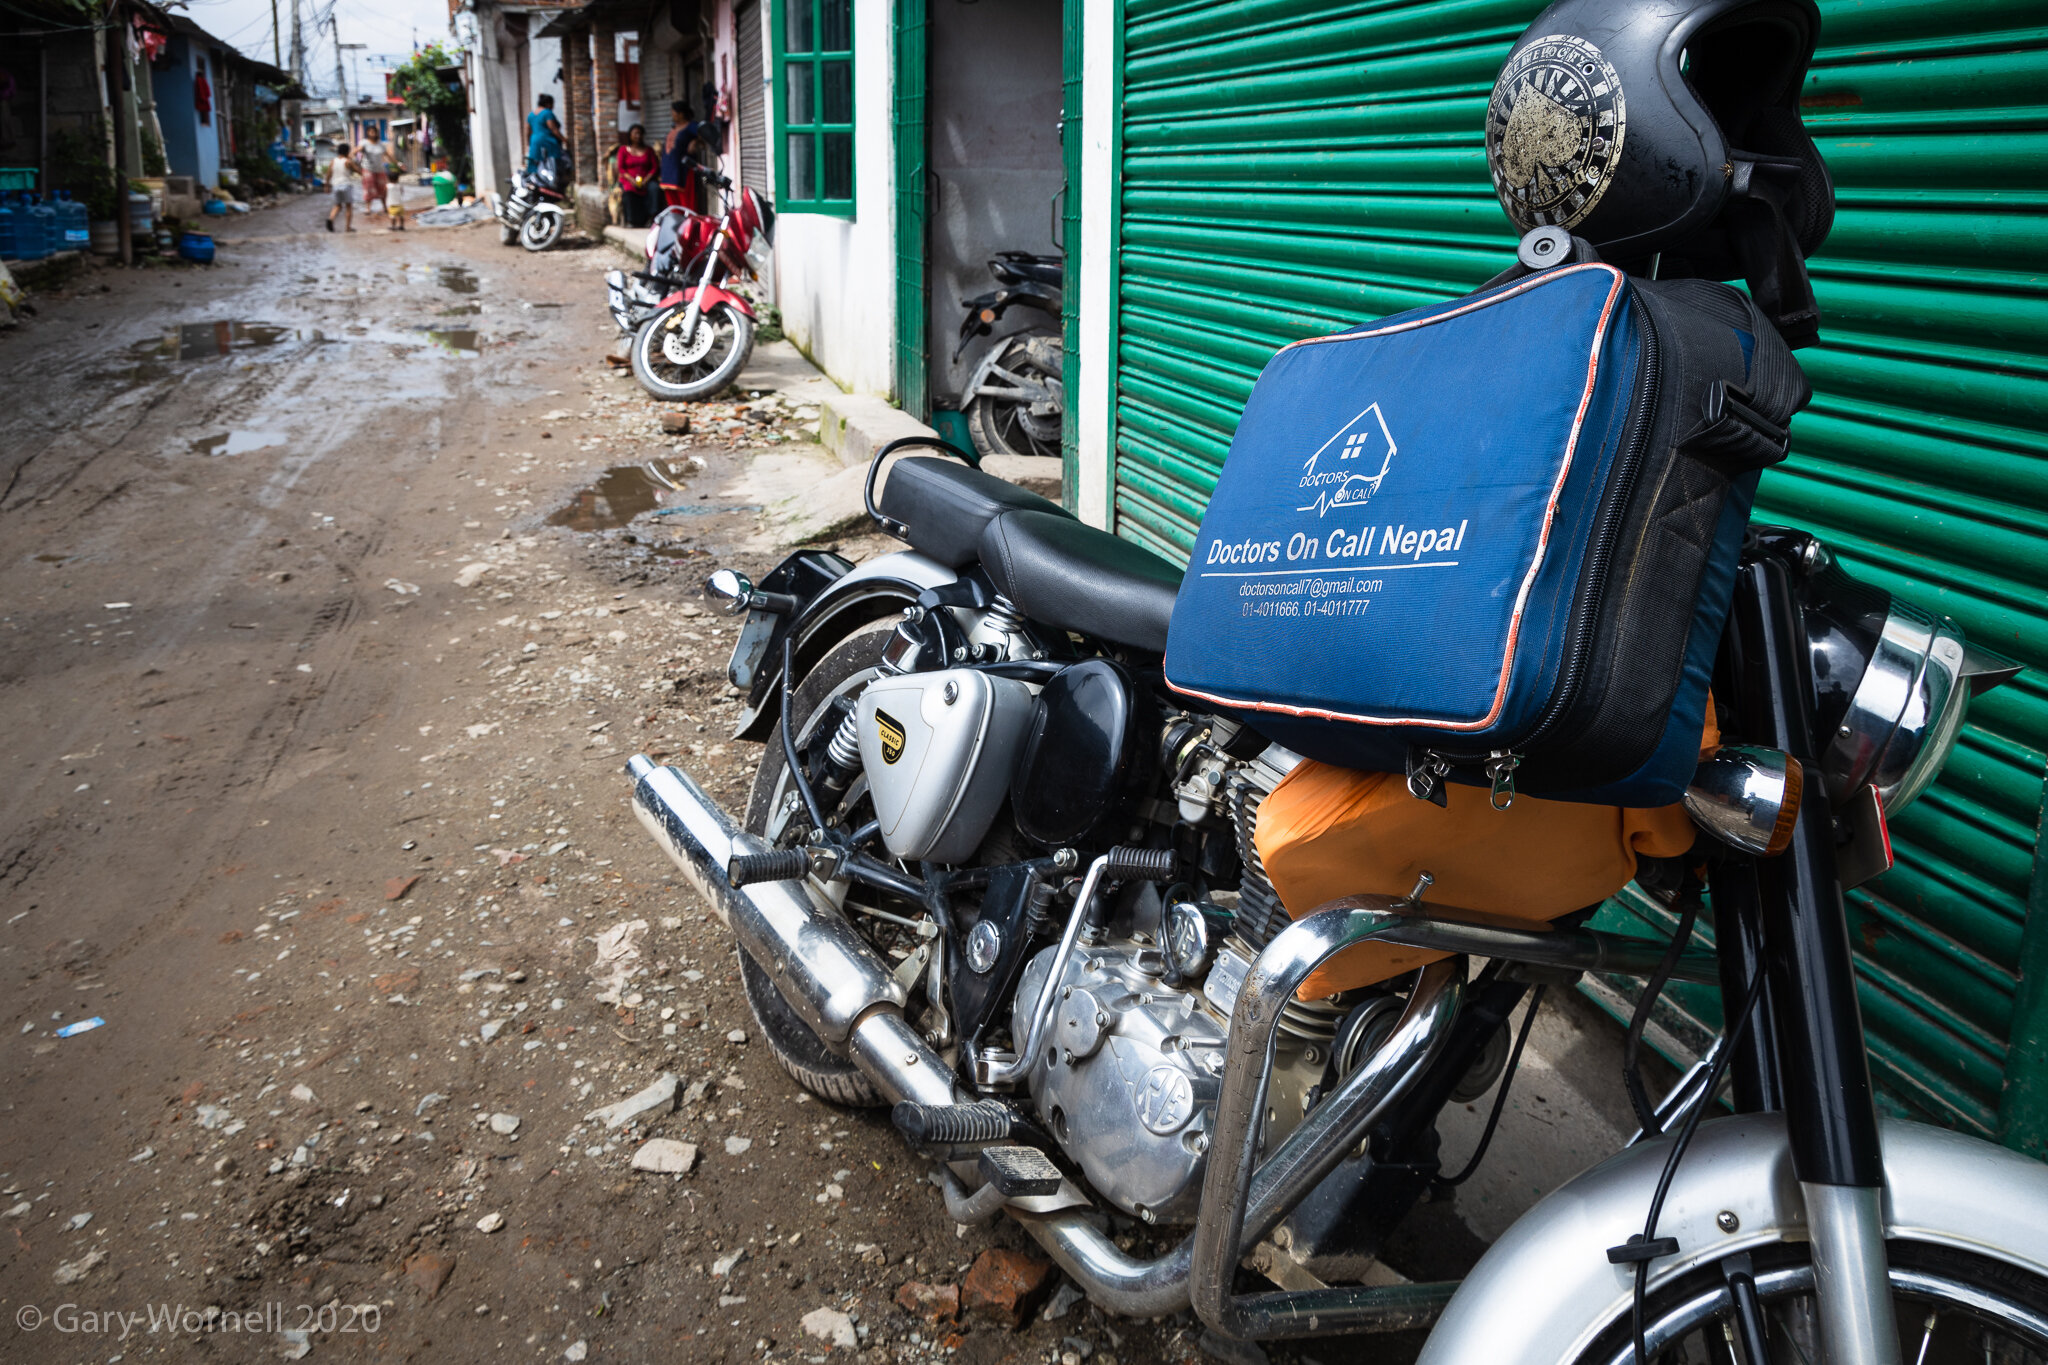  Doctors on Call motorbike at Manohara slum, Kathmandu. 